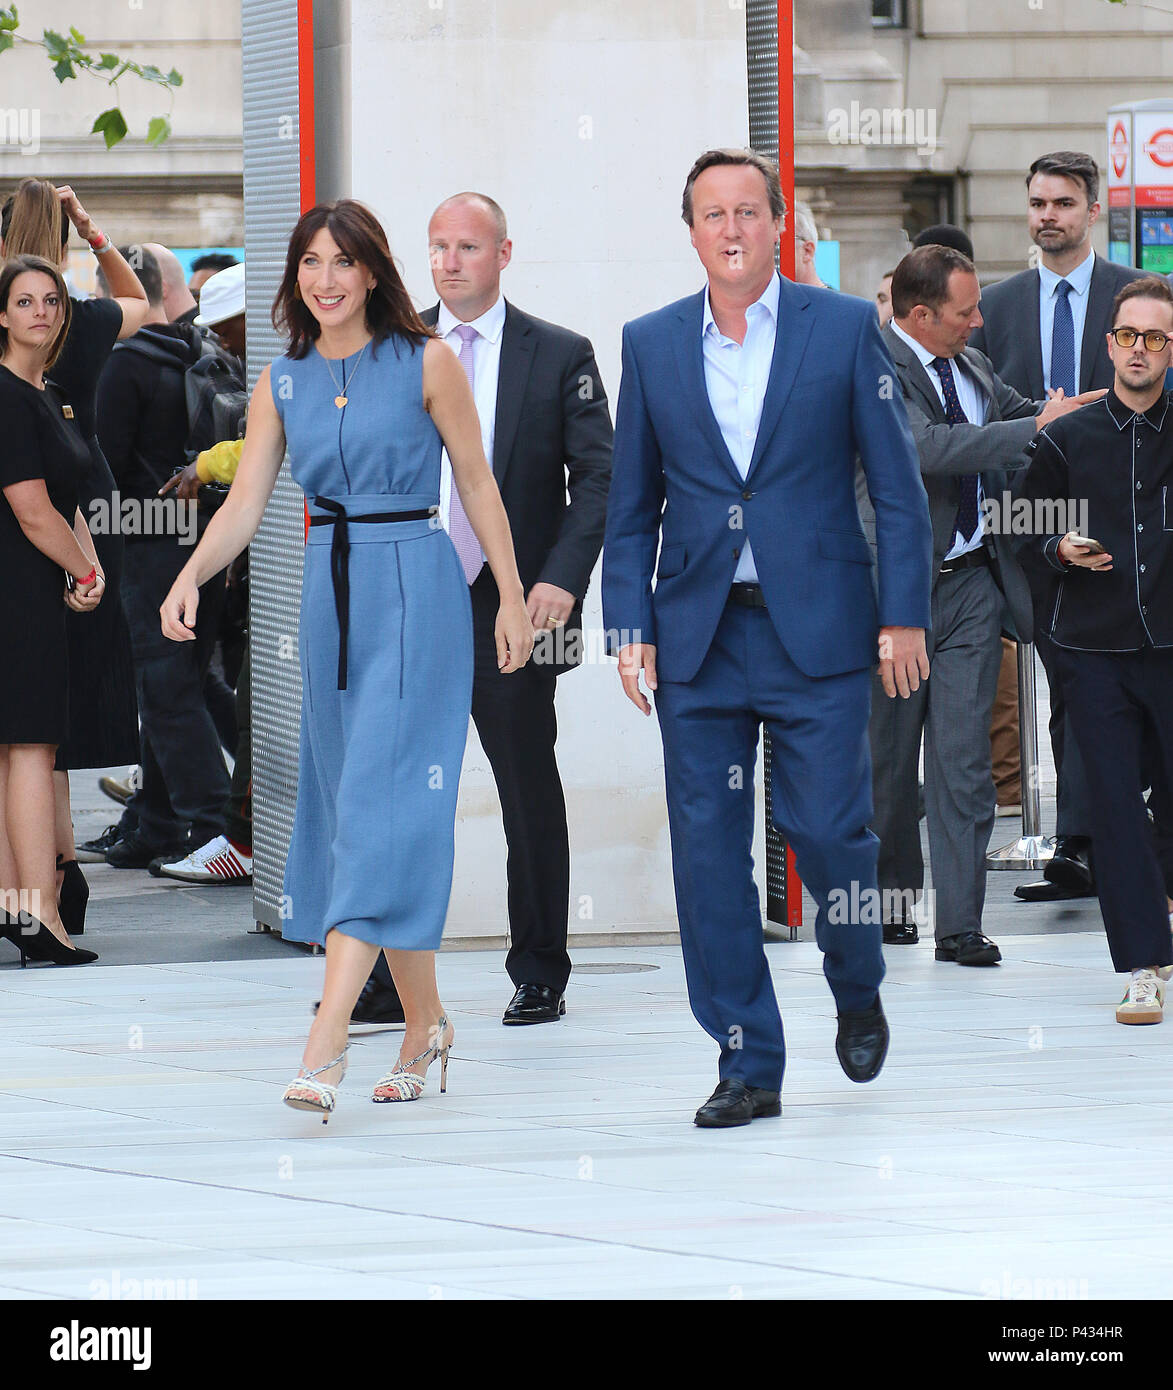 Samantha Cameron, David Cameron, V&A fiesta de verano 2018, el Victoria and Albert Museum, Londres, Reino Unido, 20 de junio de 2018, Foto de Richard Goldschmidt Foto de stock